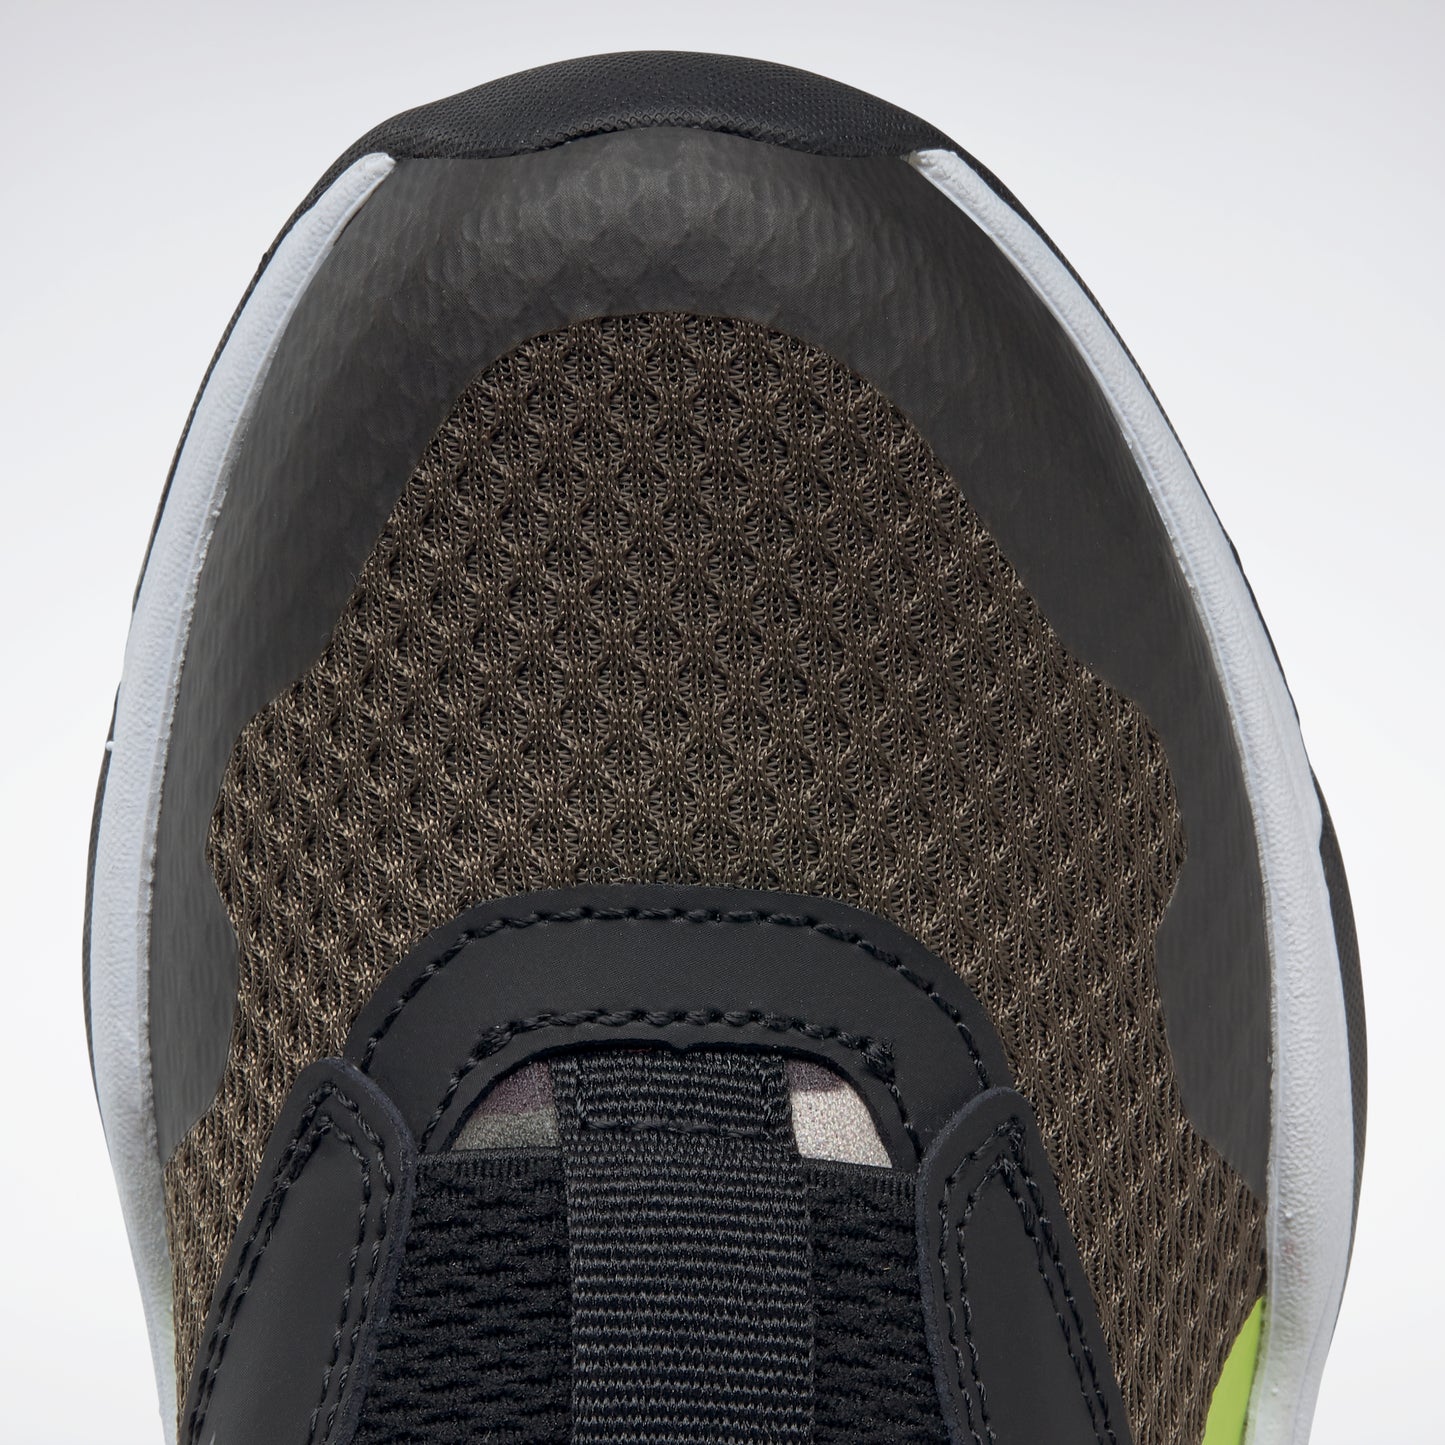 Reebok Footwear Kids Reebok Xt Sprinter Slip-On Shoes Child Armgrn/Cblack/Aciyel